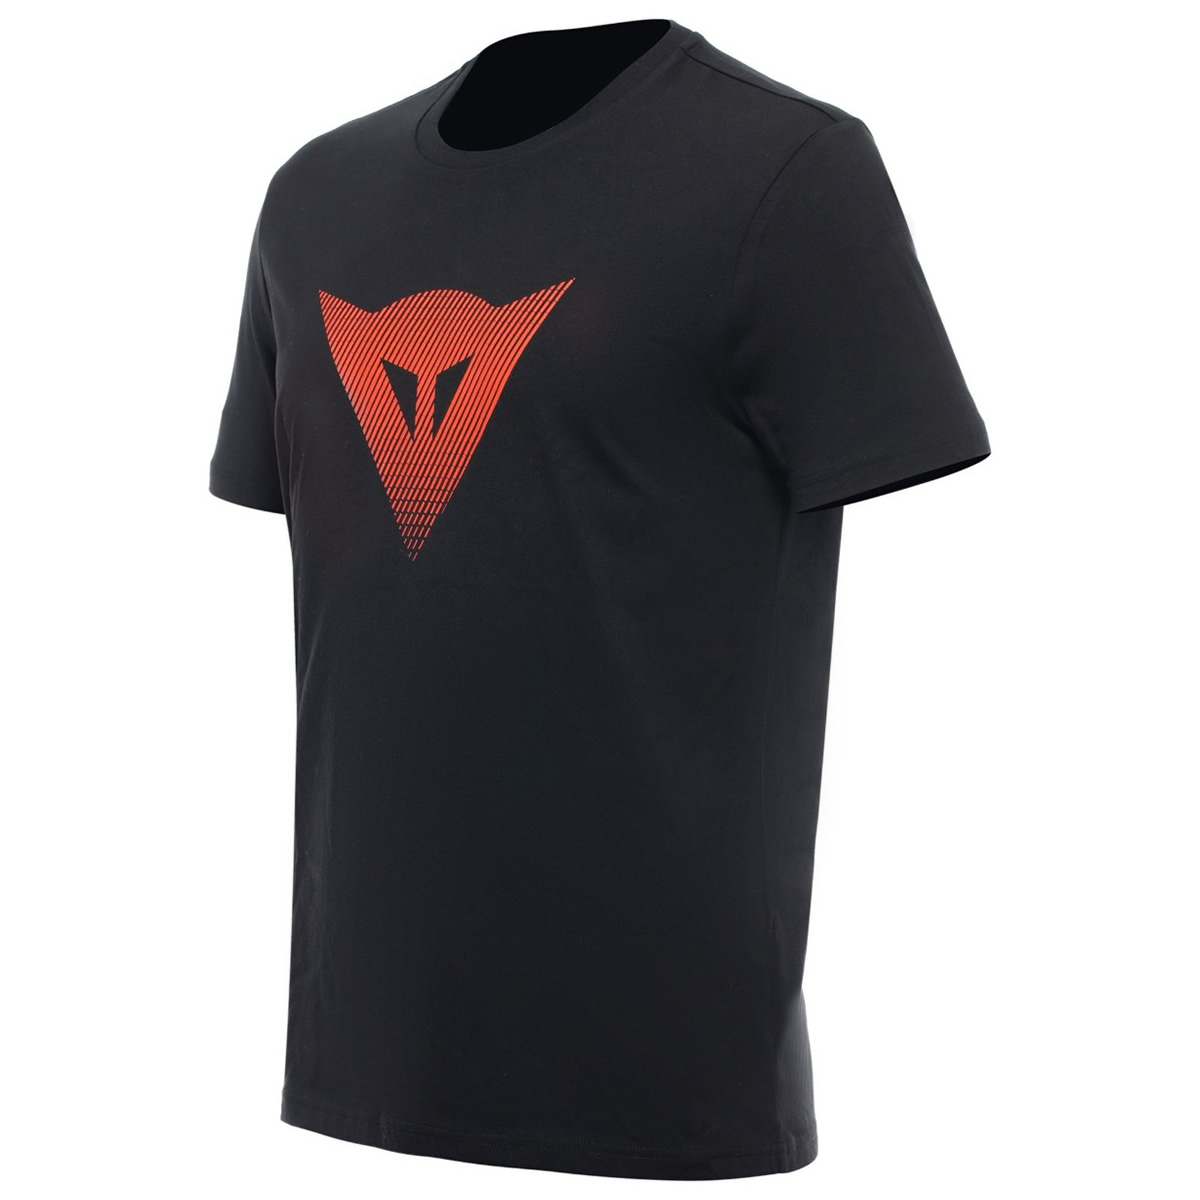 Dainese T-Shirt Logo, schwarz-fluorot